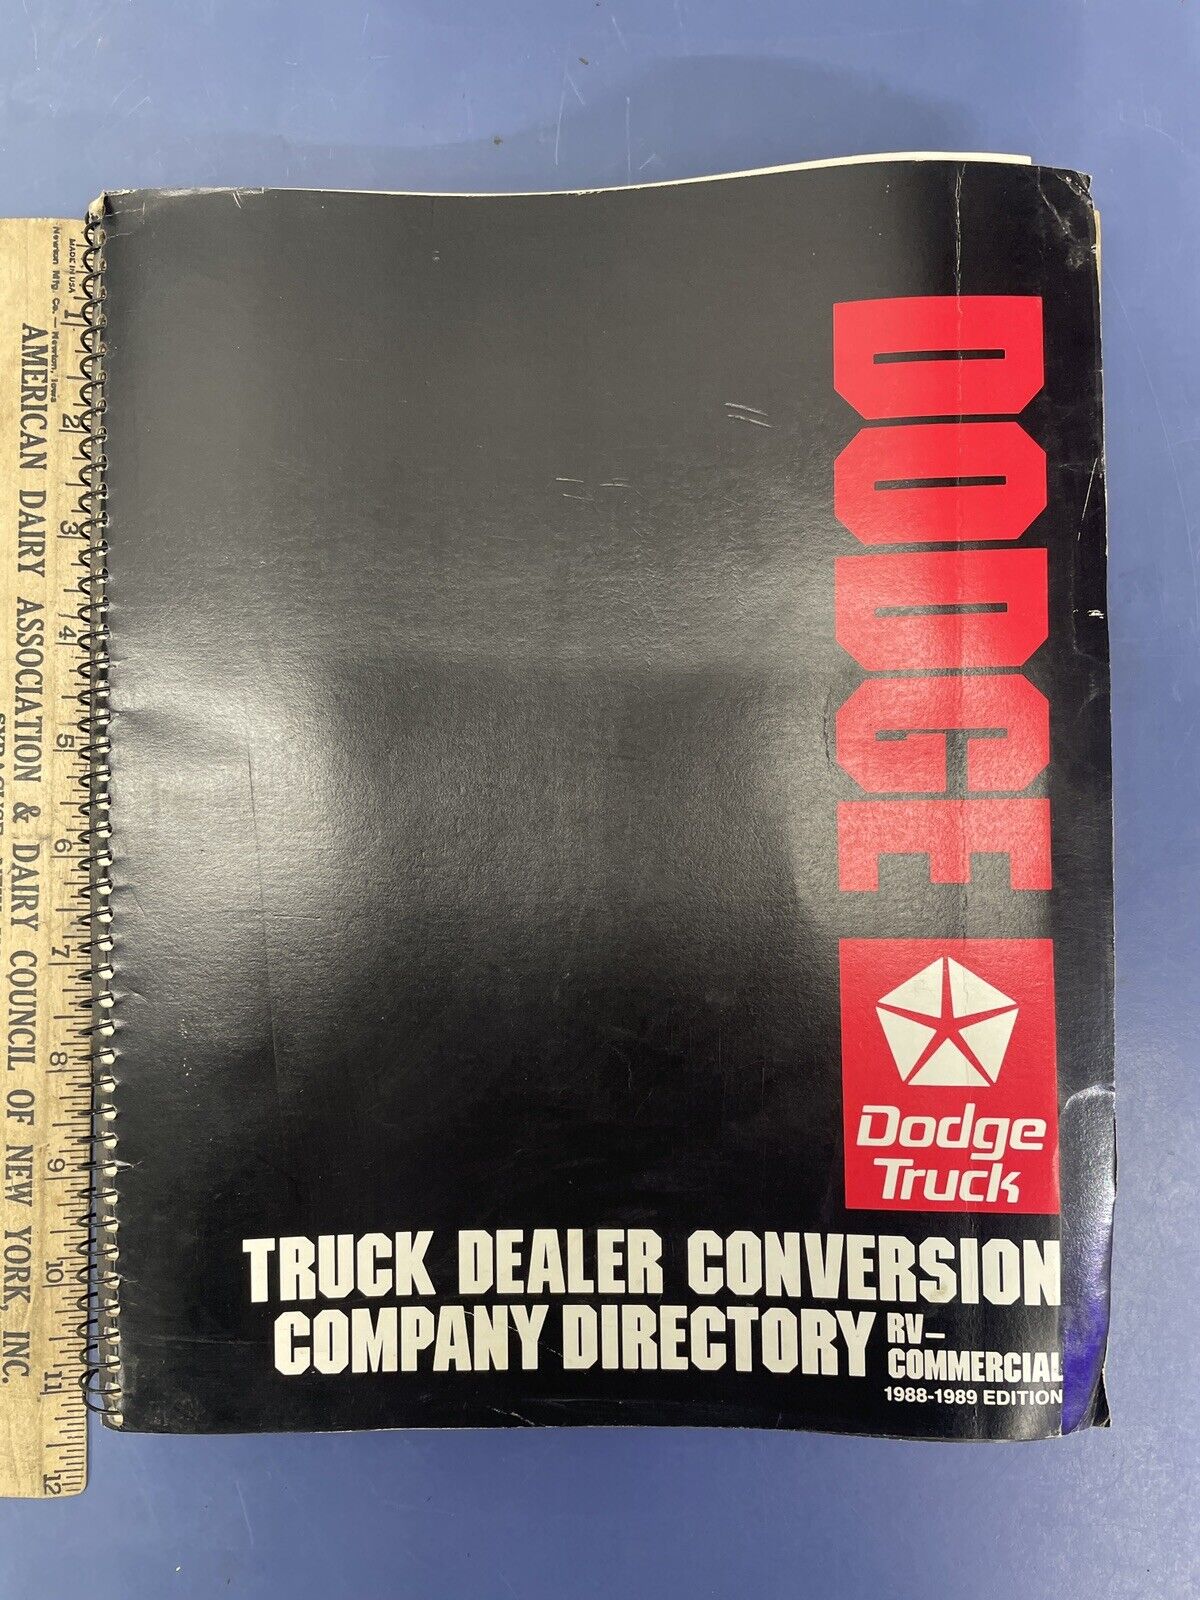 Rare 1988 Dodge truck dealer conversion company directory RV commercial